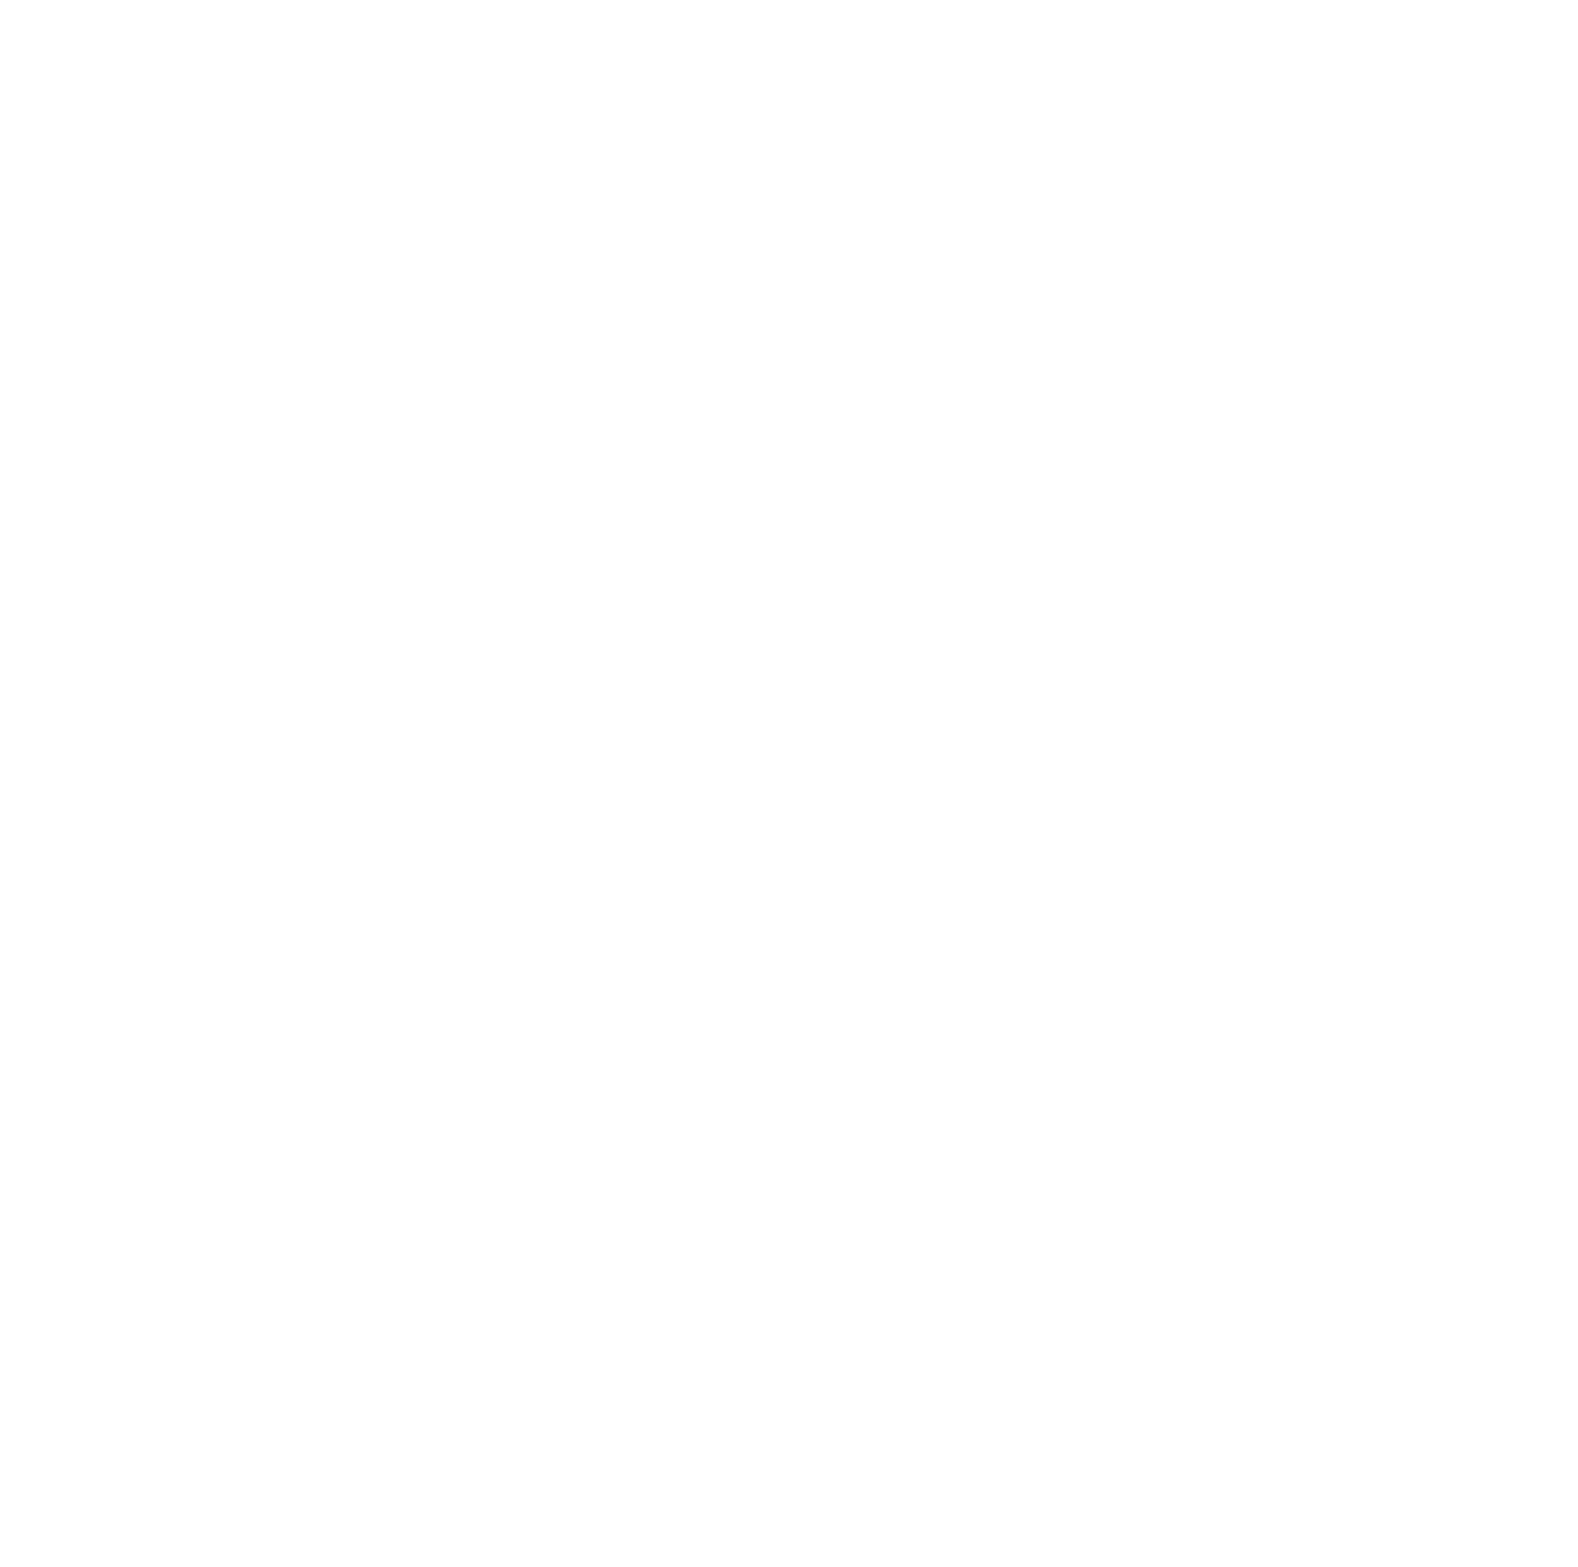 Metropolitan Bank (Metrobank) logo for dark backgrounds (transparent PNG)